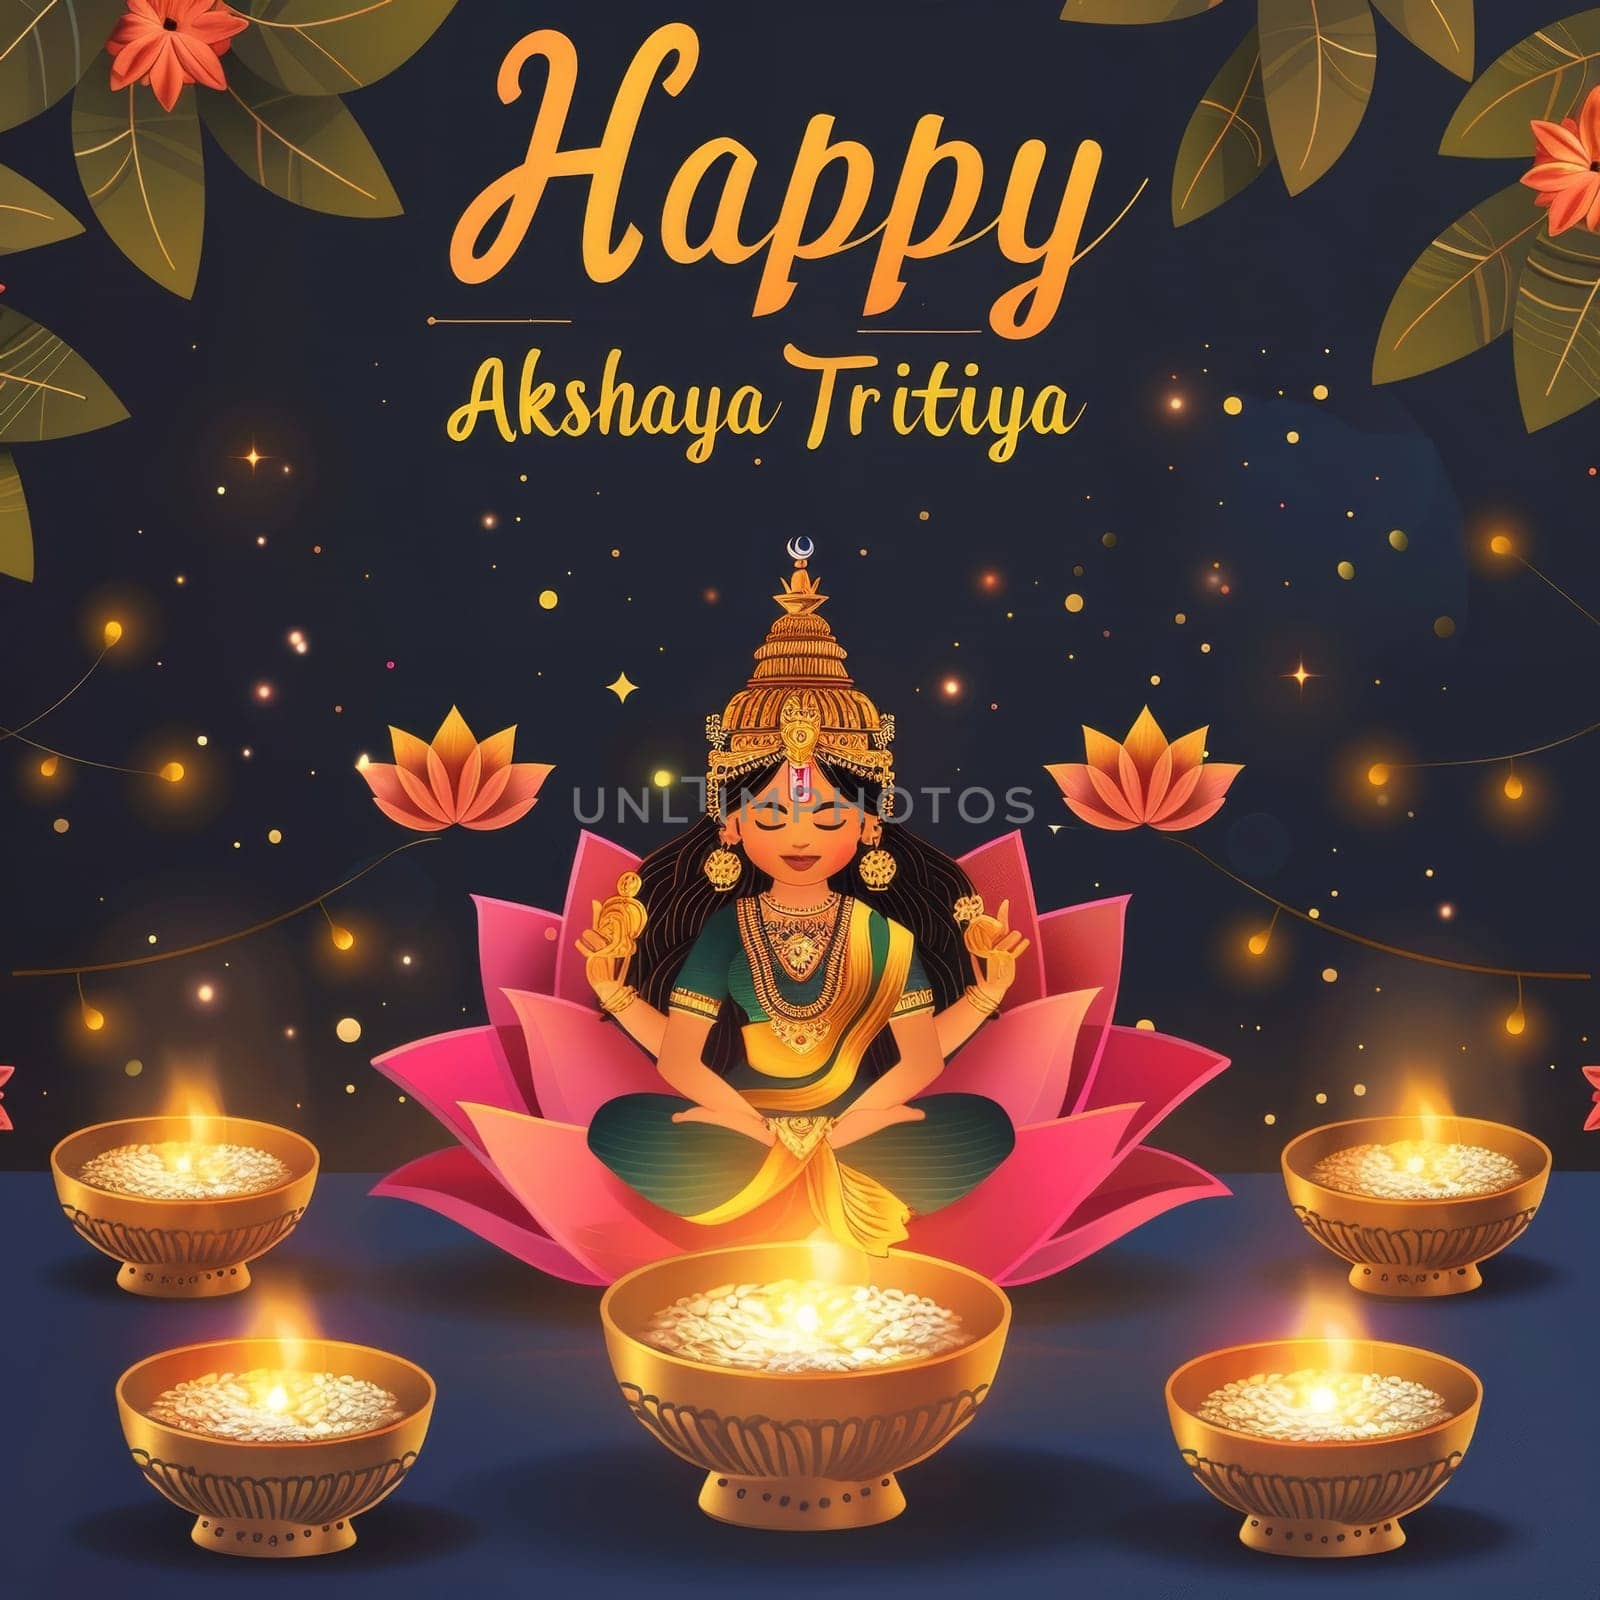 A festive Akshaya Tritiya greeting showcasing Goddess Lakshmi seated on a lotus with surrounding diyas against a starry sky. by sfinks